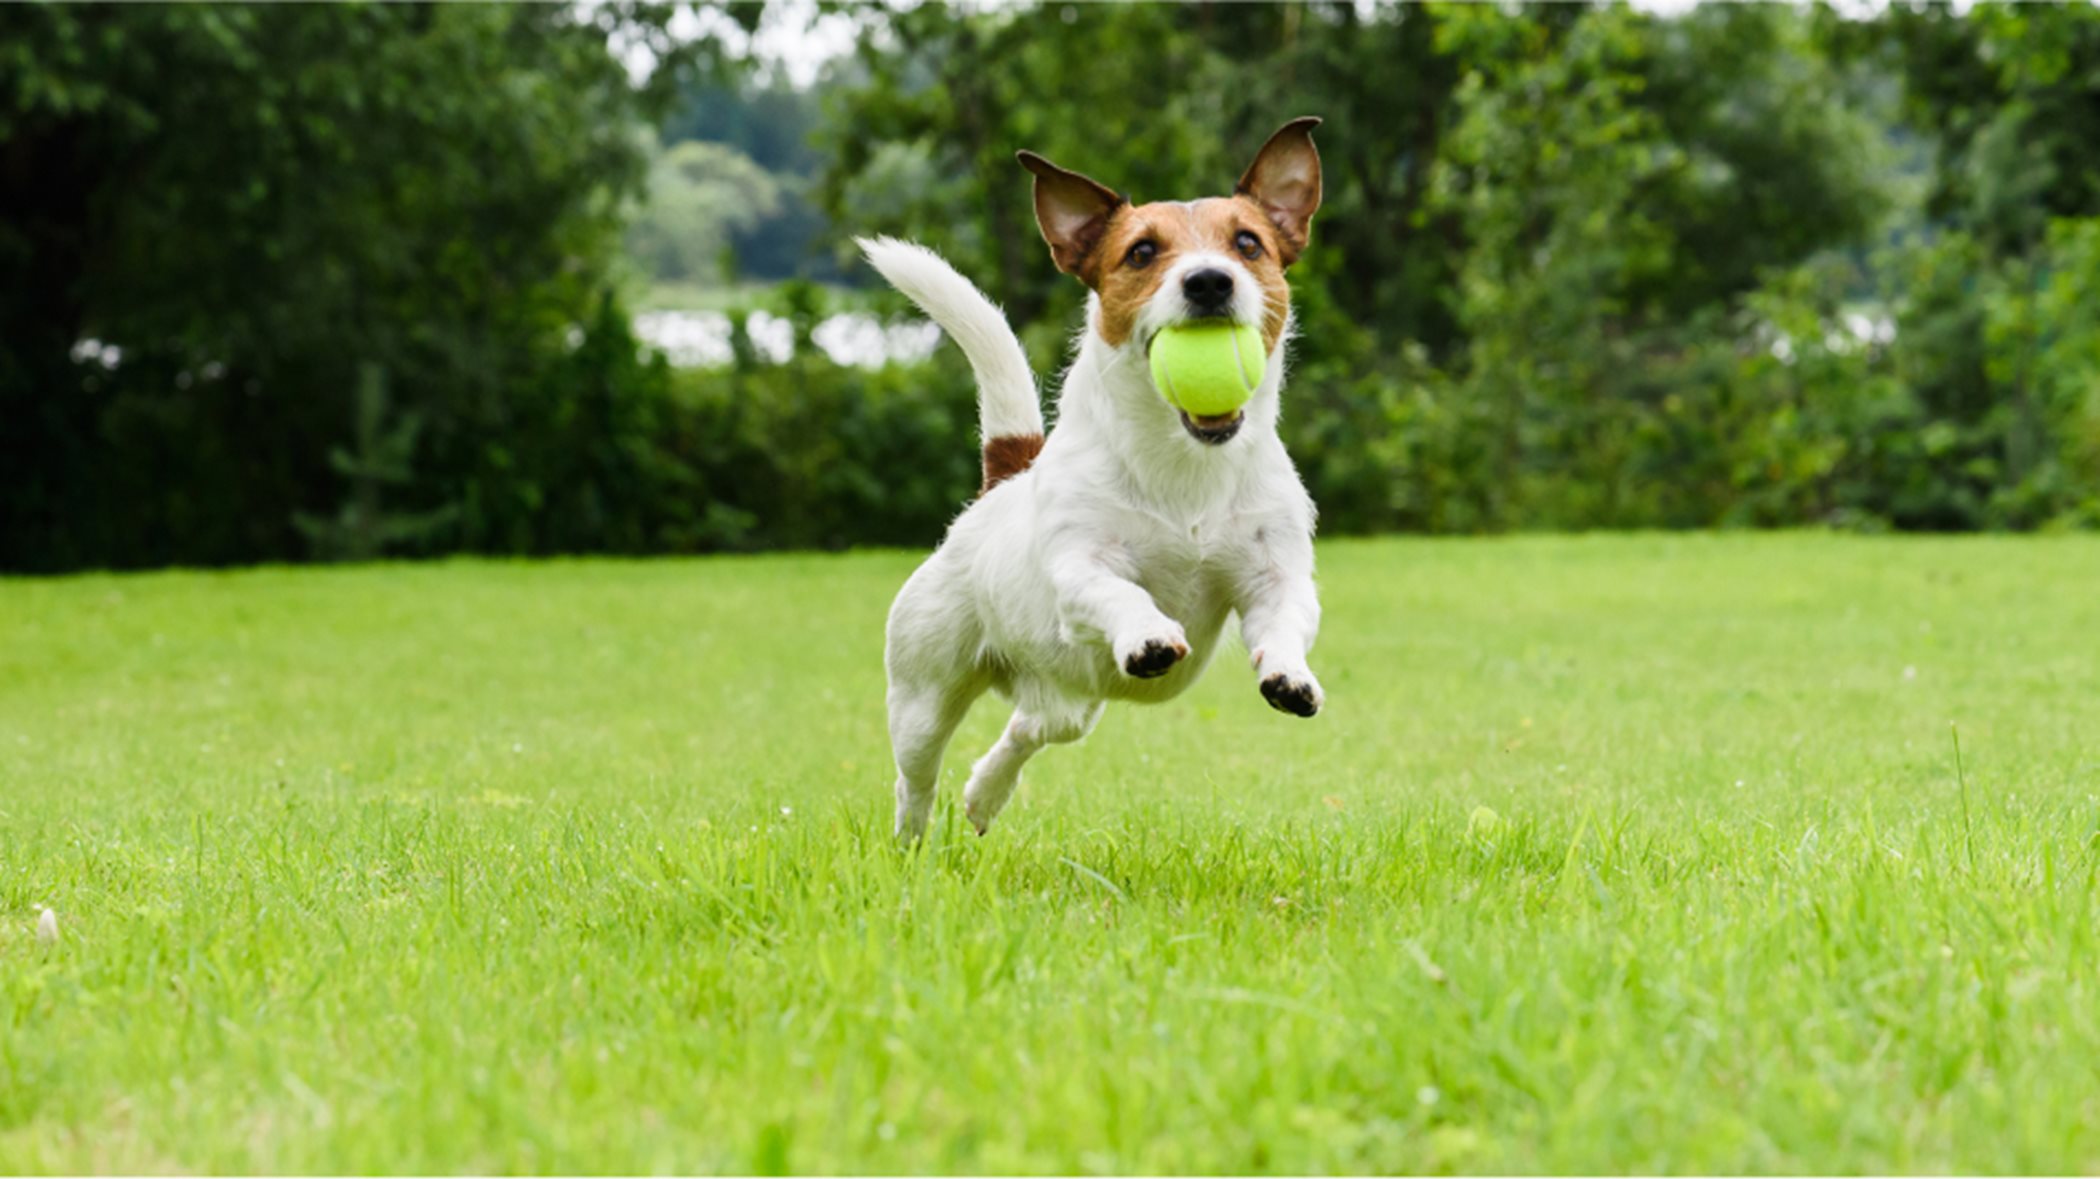 Dog running on green grass with tennis ball